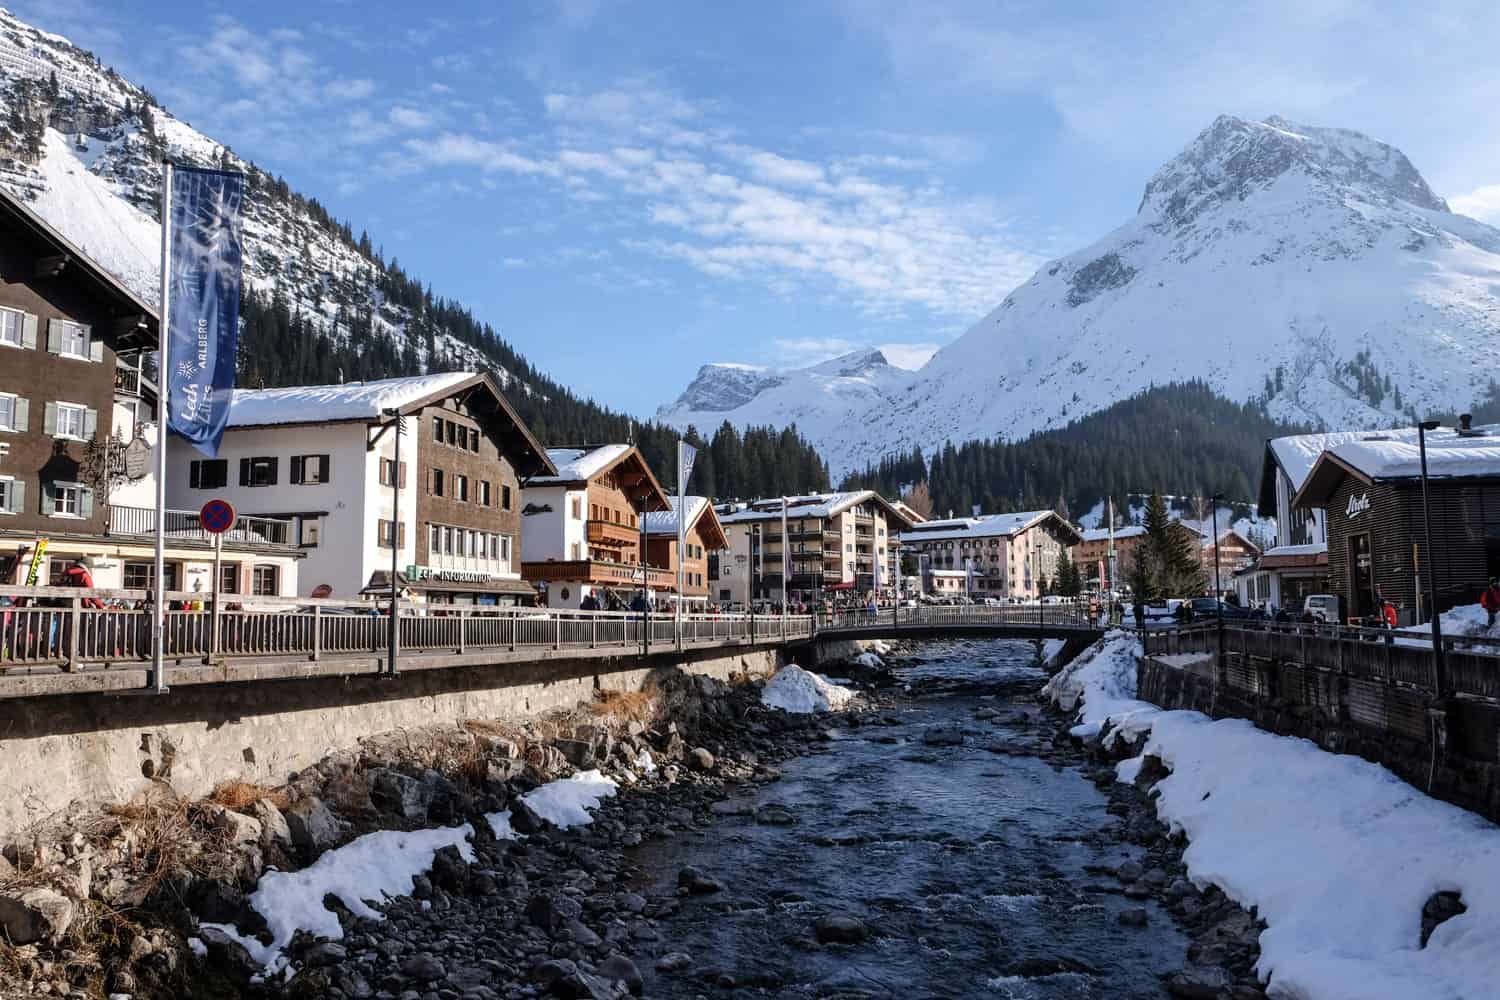 The ski town of Lech in Austria